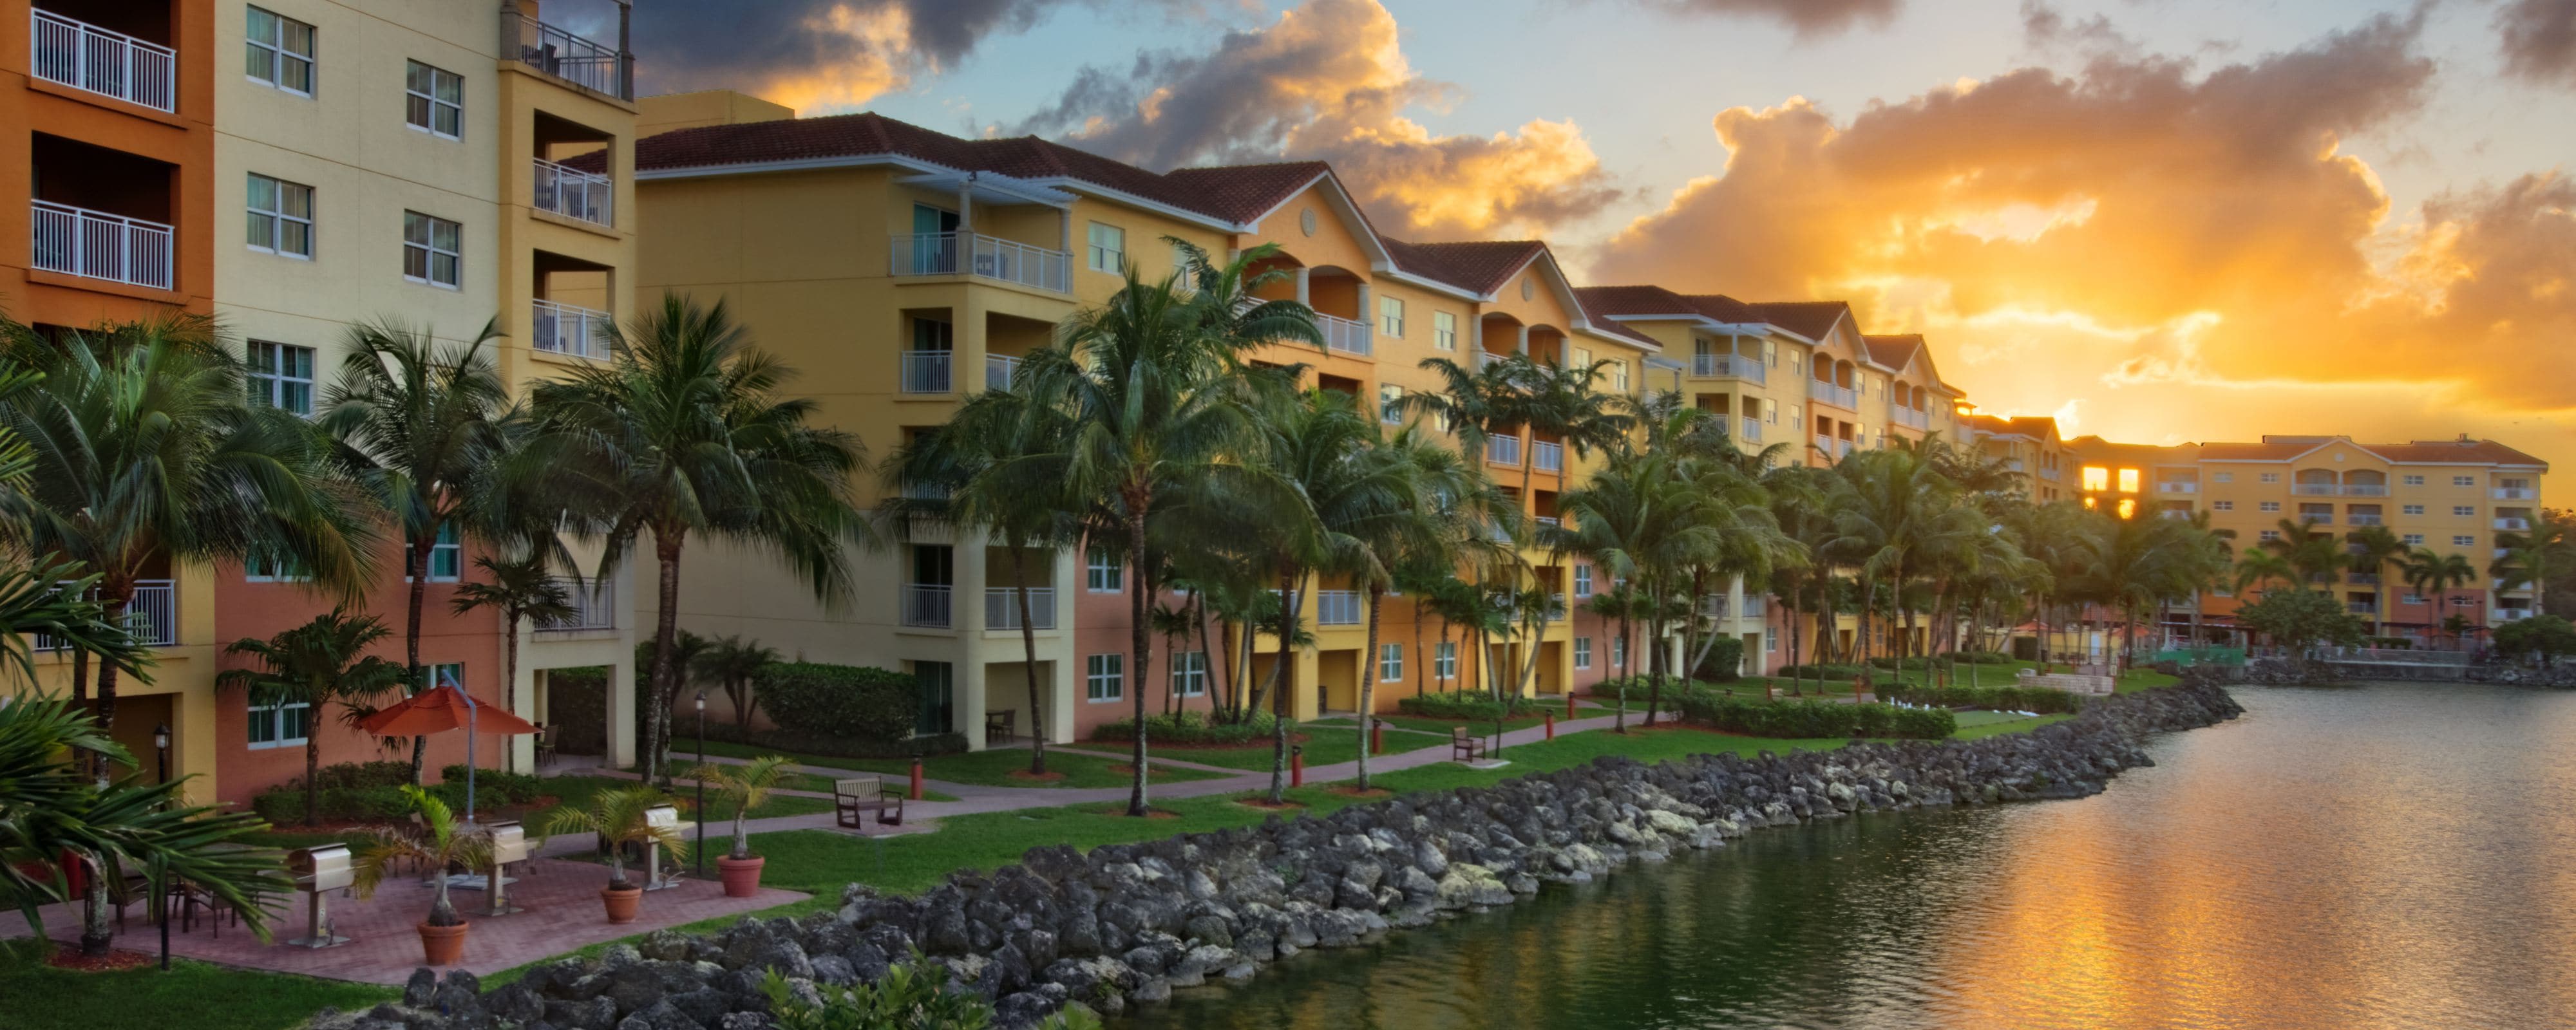 Marriott Hotels In Doral Florida